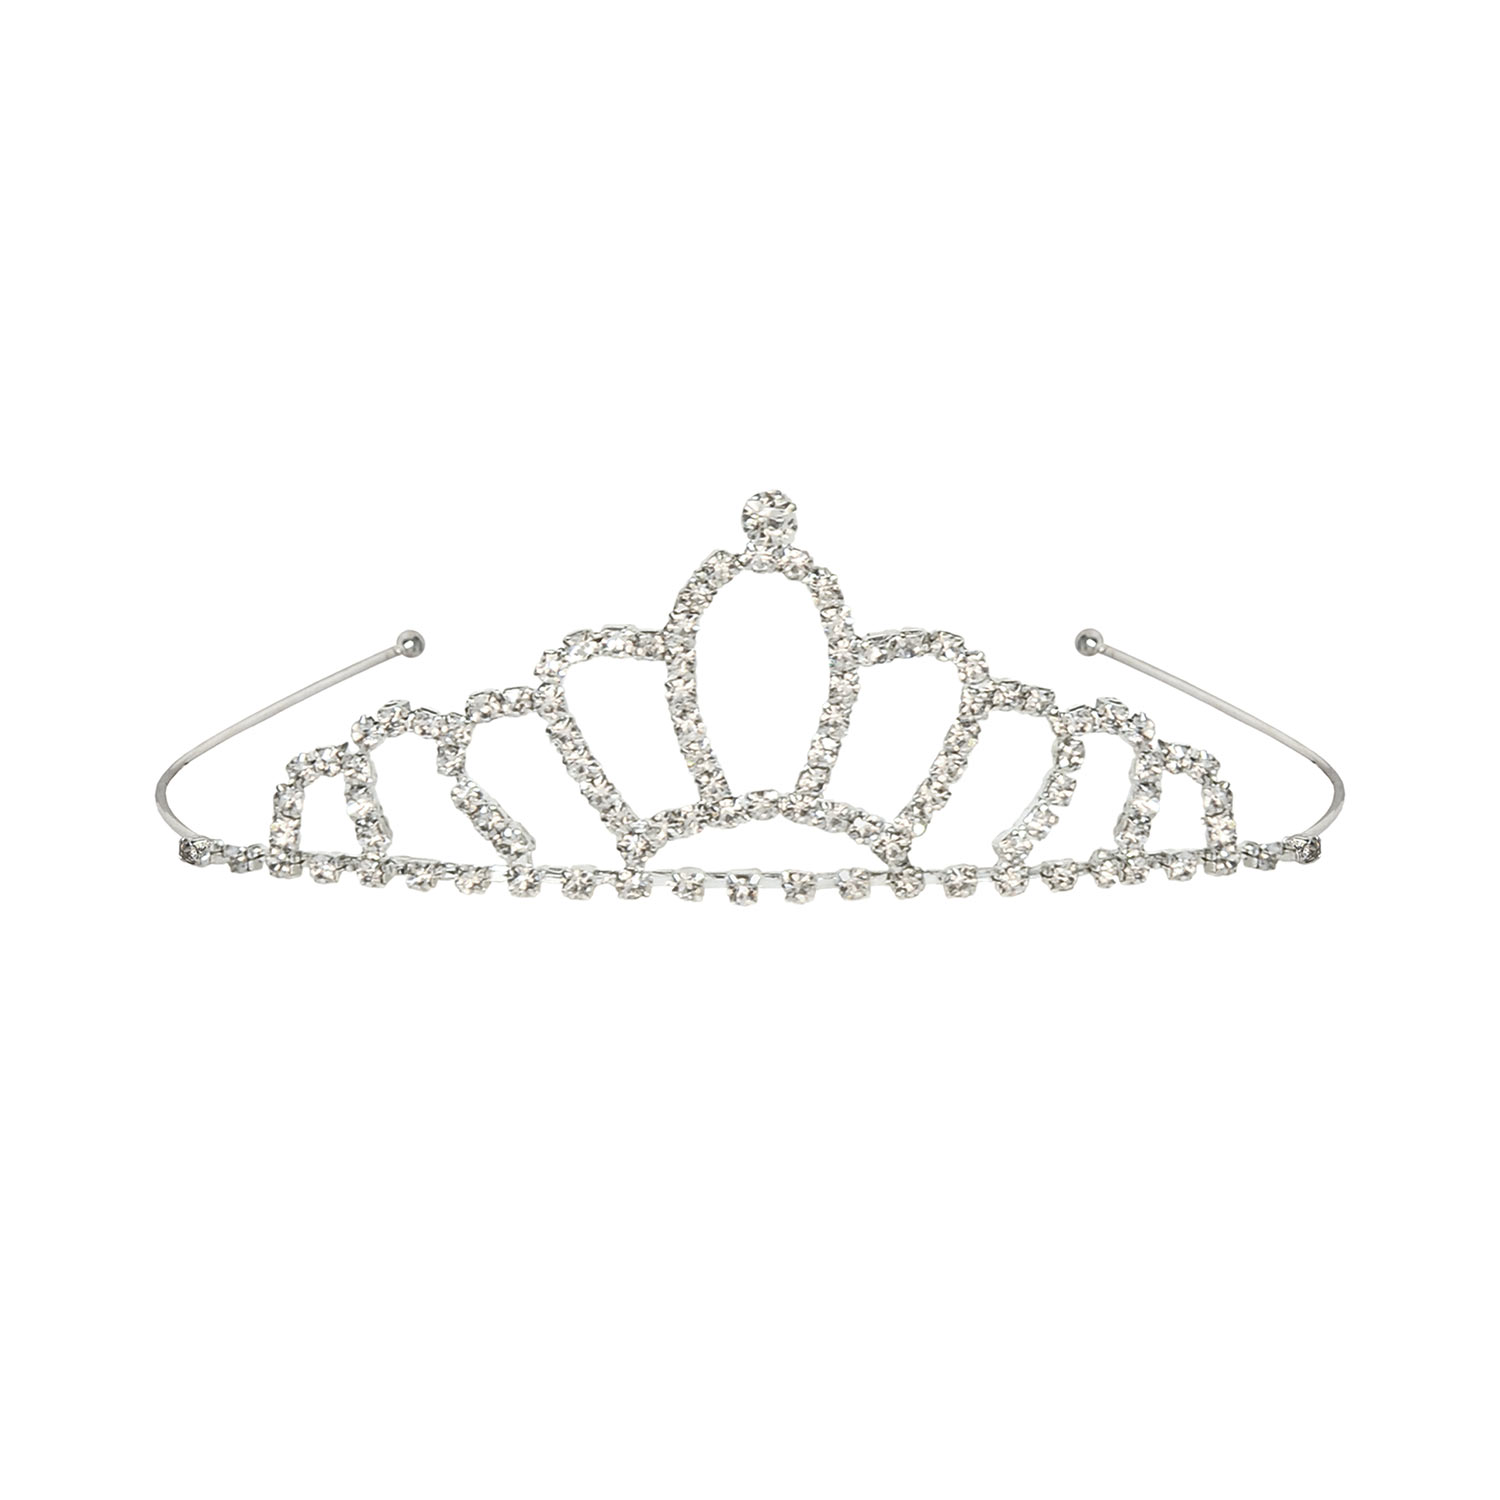 Silver tiara with shimmering rhinestones.